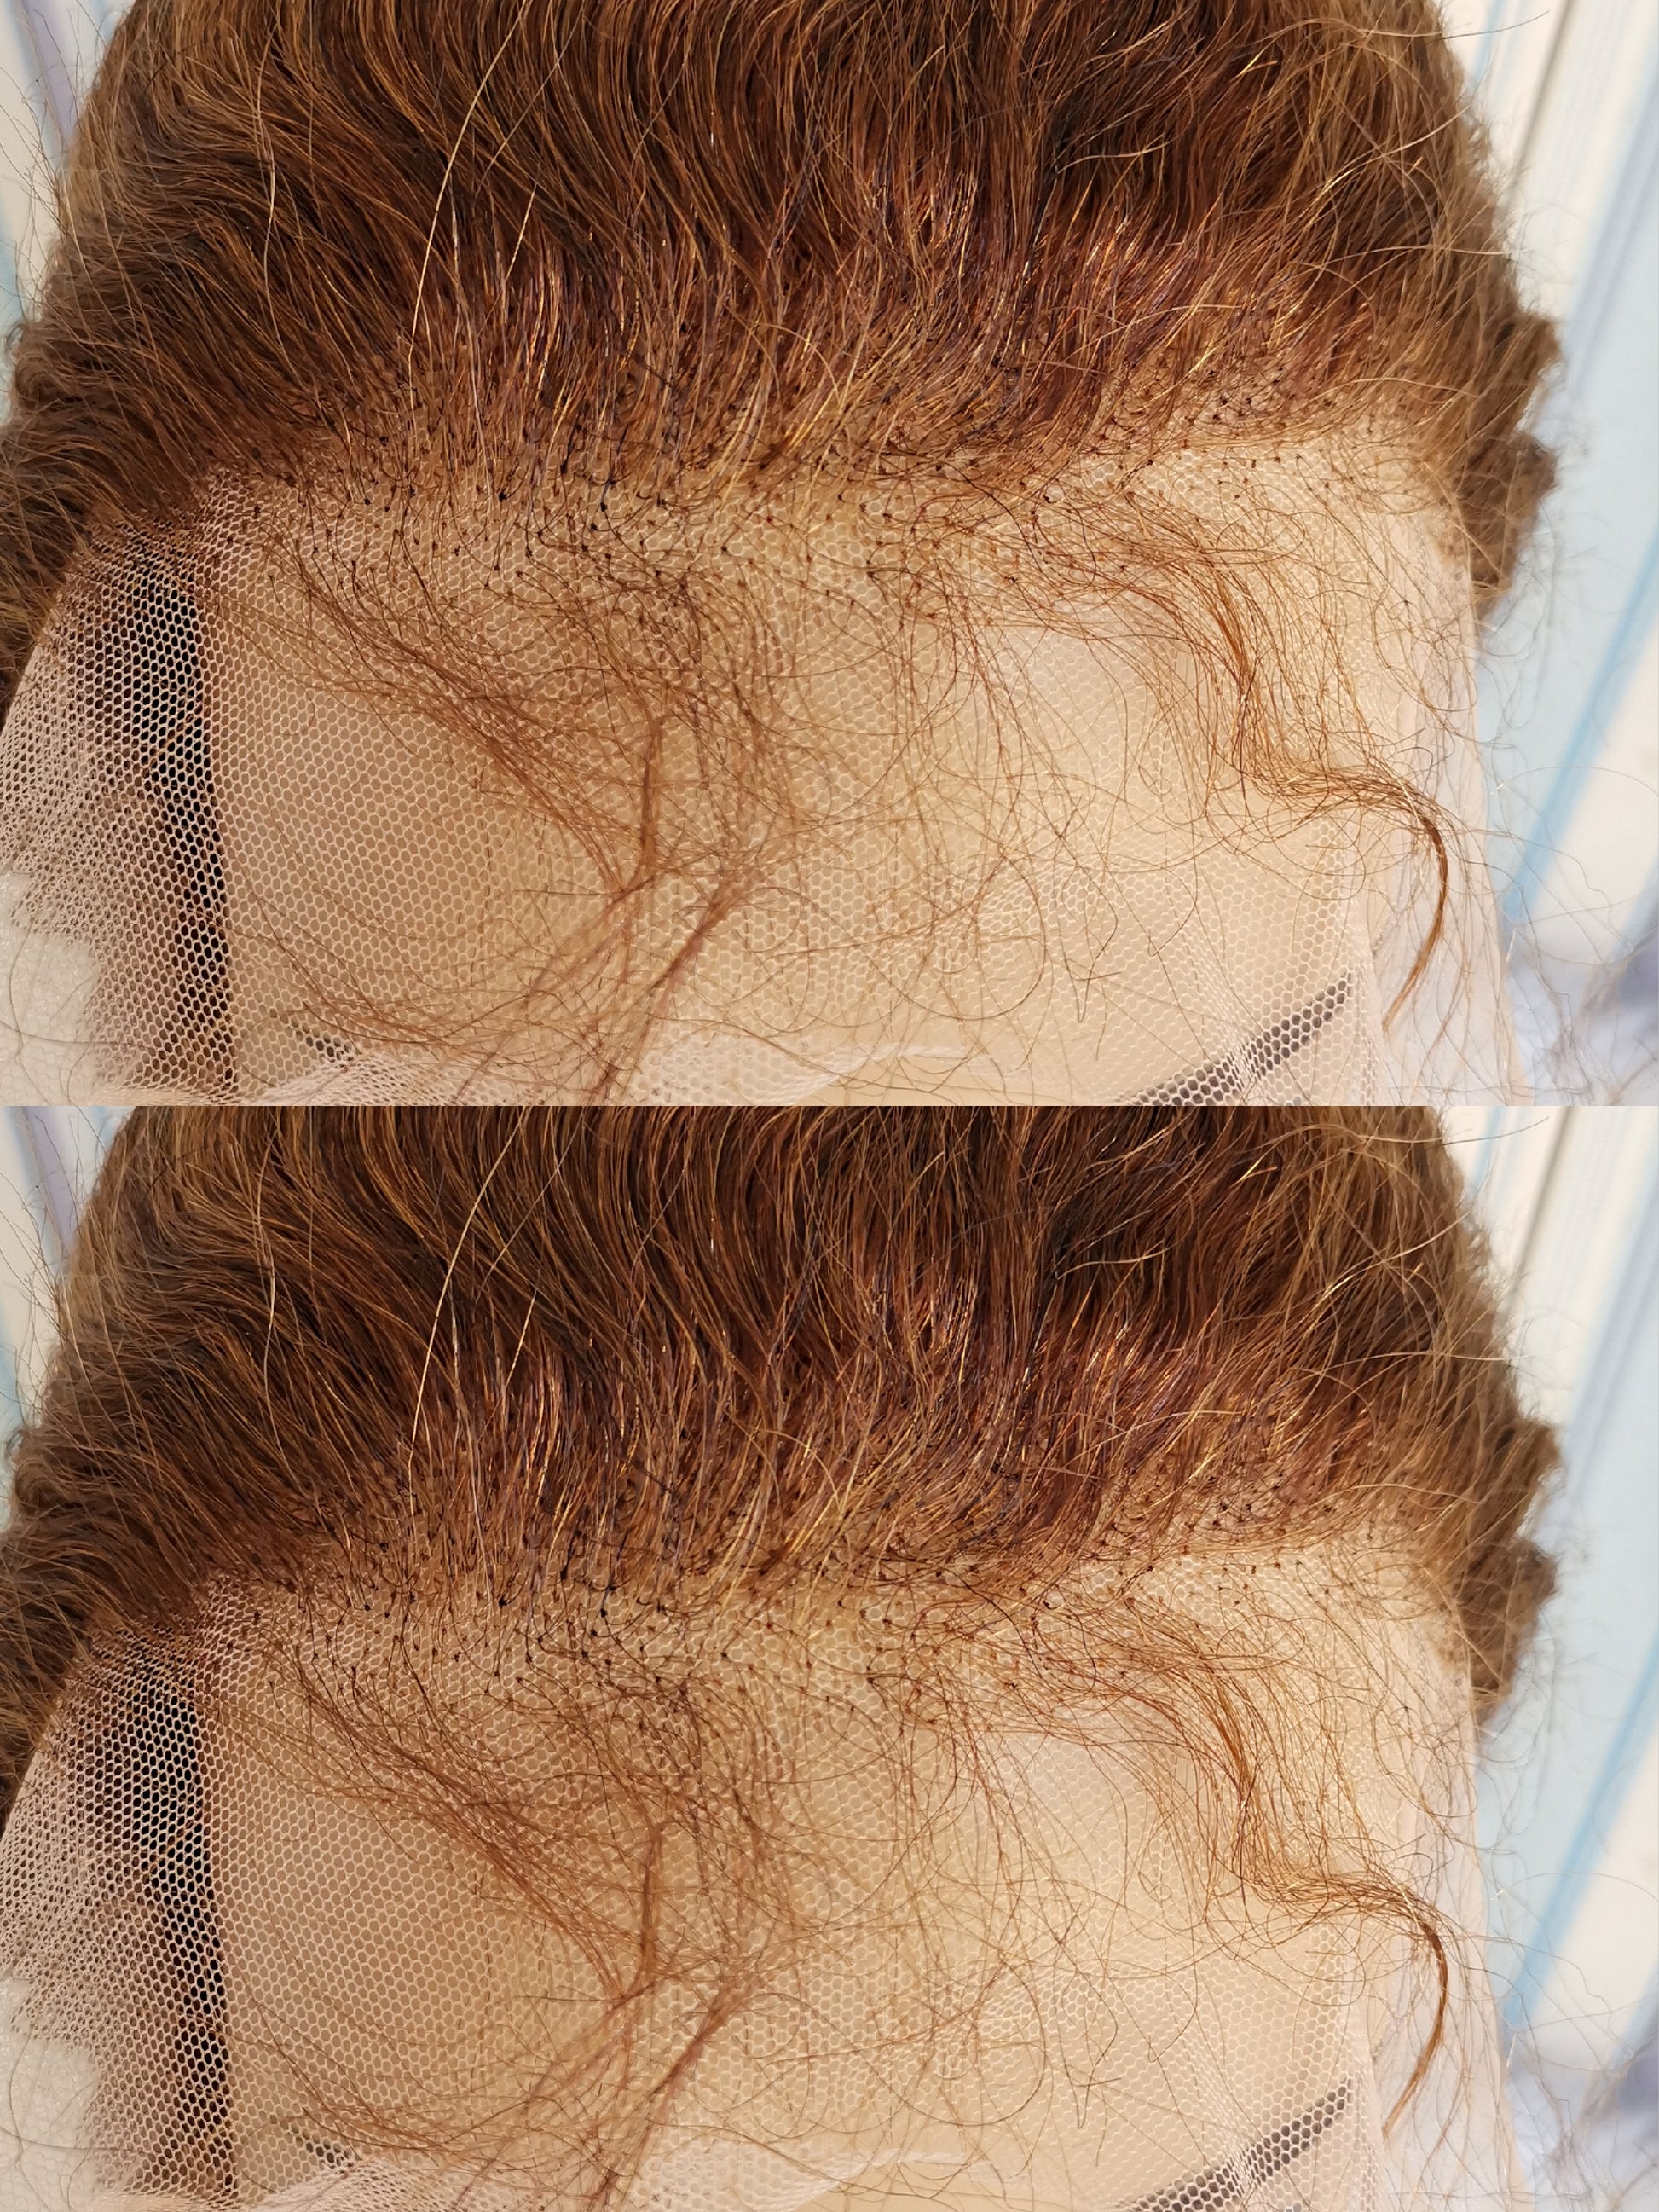 180% Density Honey Blonde Transparent Lace Front Wigs Human Hair Deep Wave by Estelle Wig - Estelle Wig